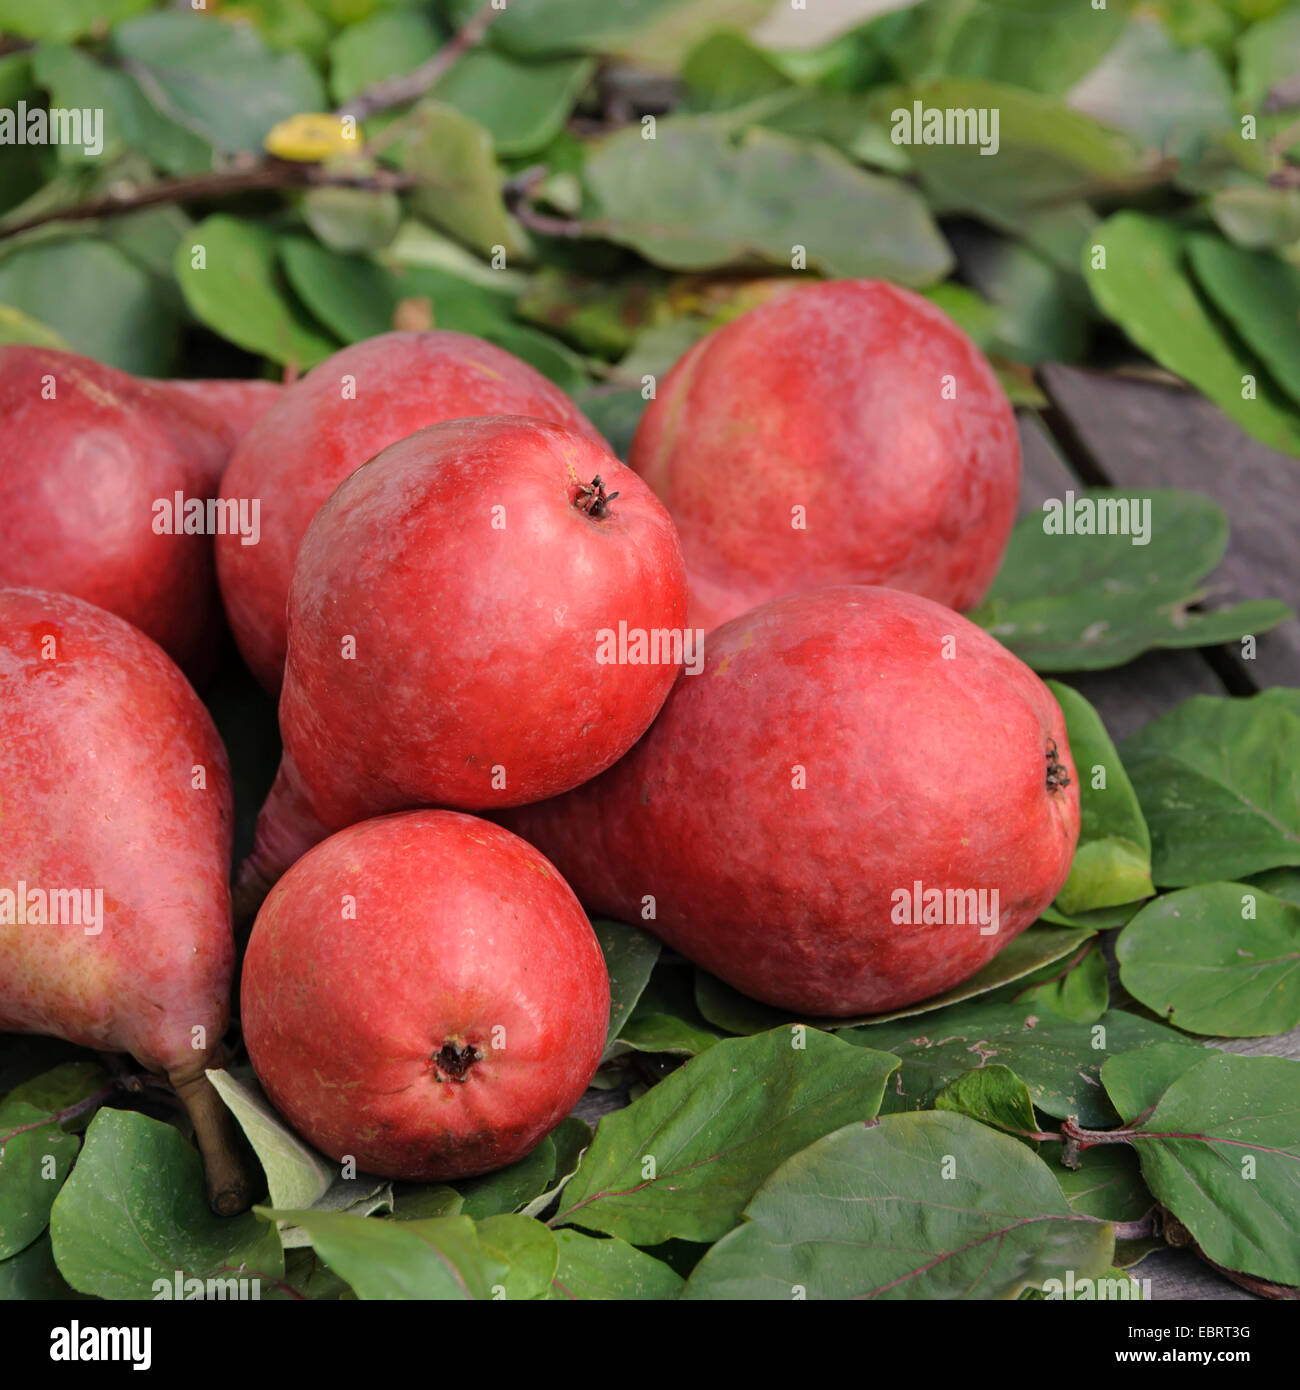 Common pear (Pyrus communis 'Starkrimson', Pyrus communis Starkrimson), pears of cultivar Starkrimson Stock Photo